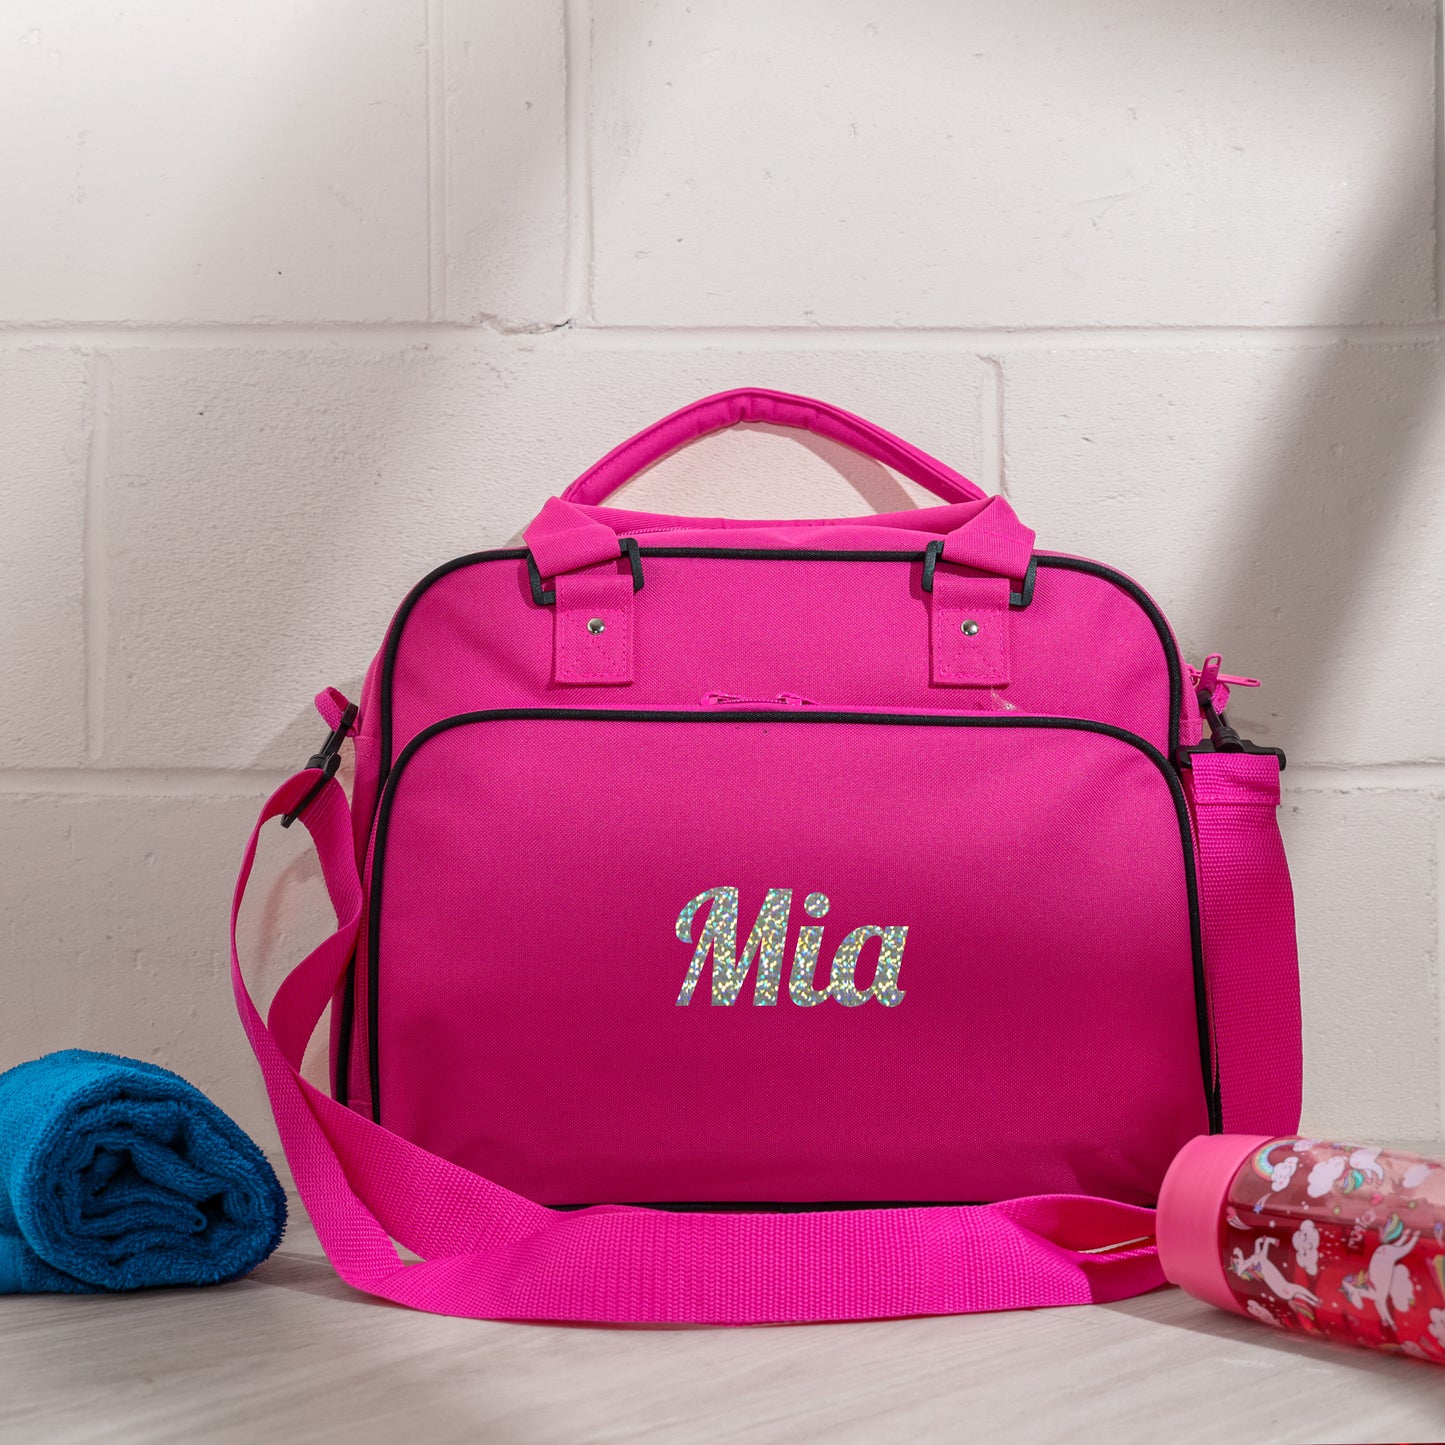 Personalised Girls Sports Bag with Name Dancing Swimming Gymnastic School Gym Bag  - Always Looking Good -   